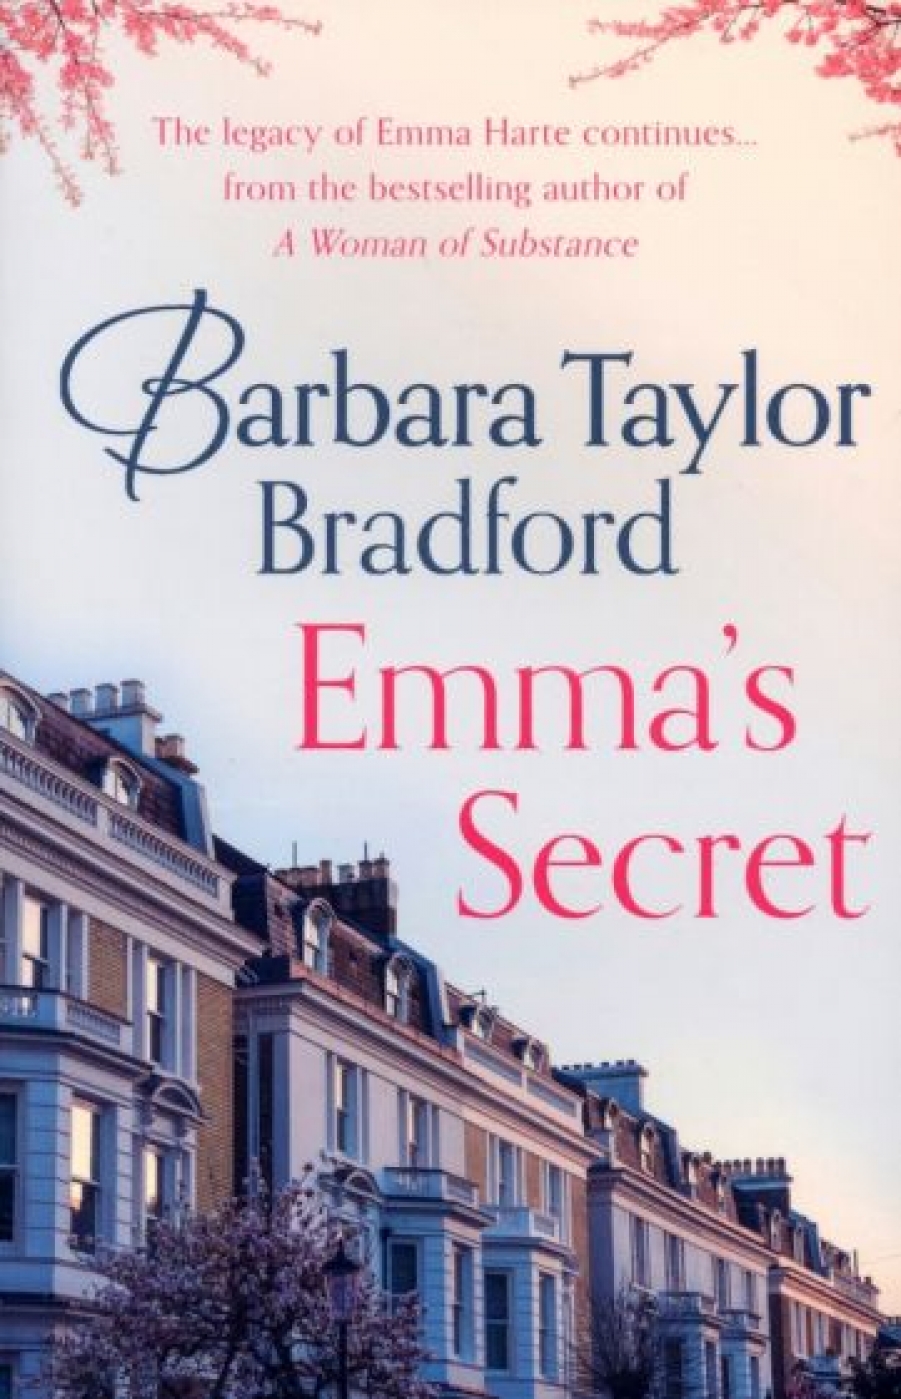 Bradford Barbara Taylor Emma's Secret 